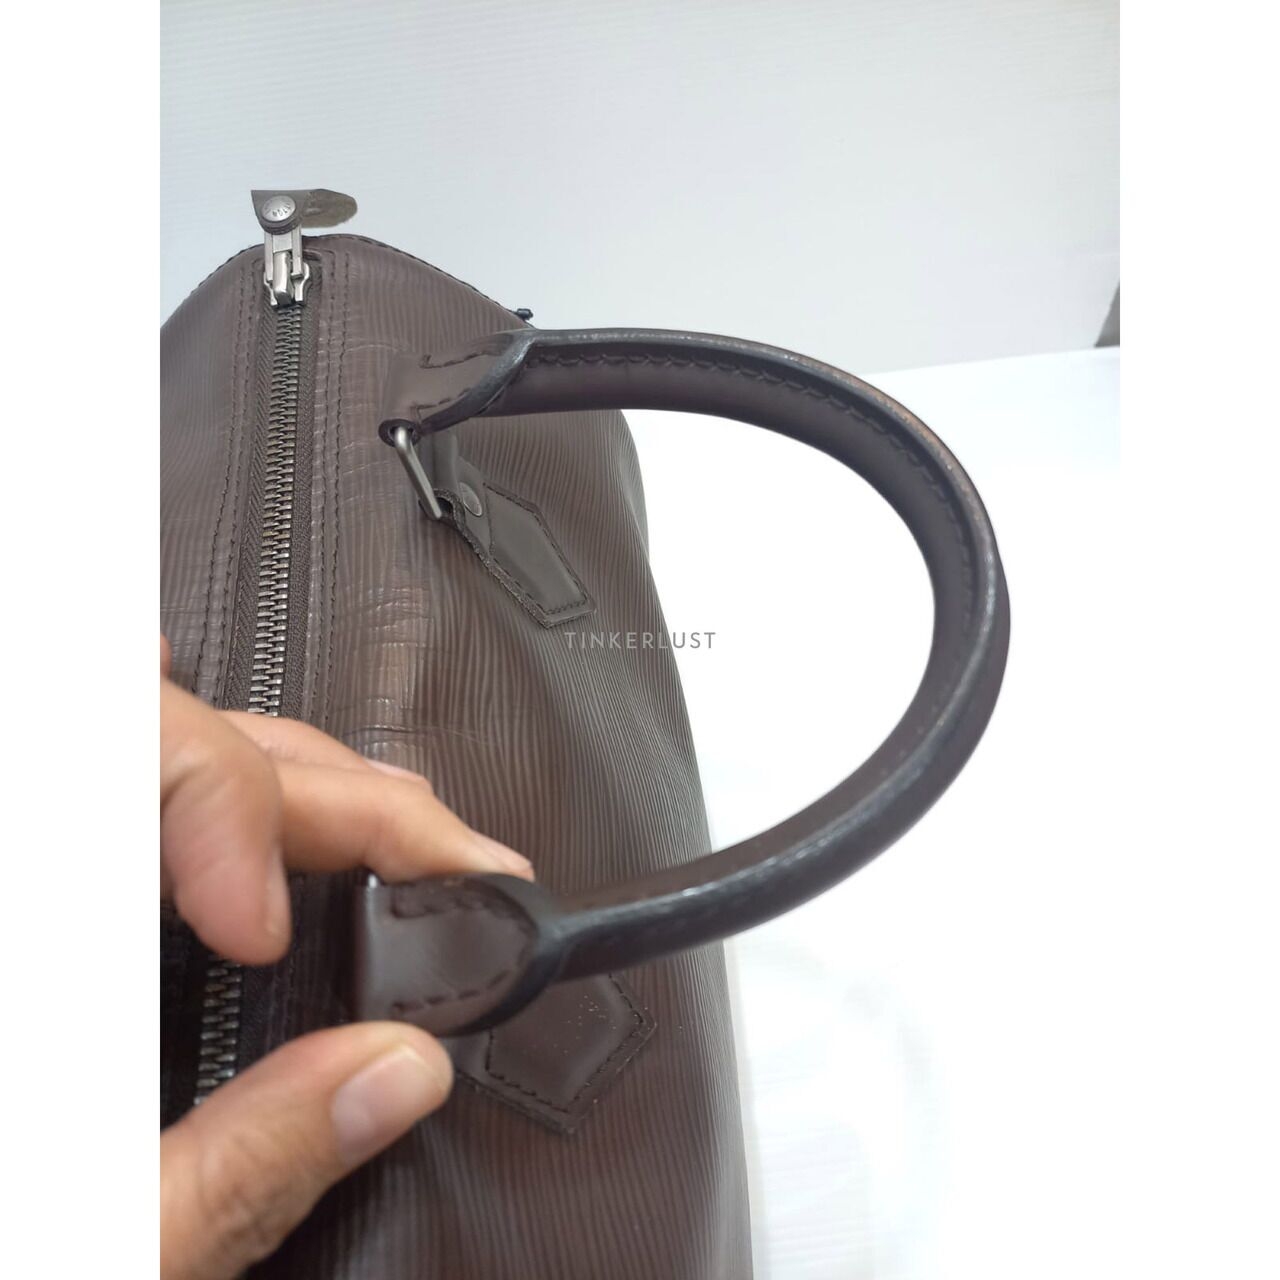 Louis Vuitton Speedy 25 Epi Leather Brown 2004 Handbag